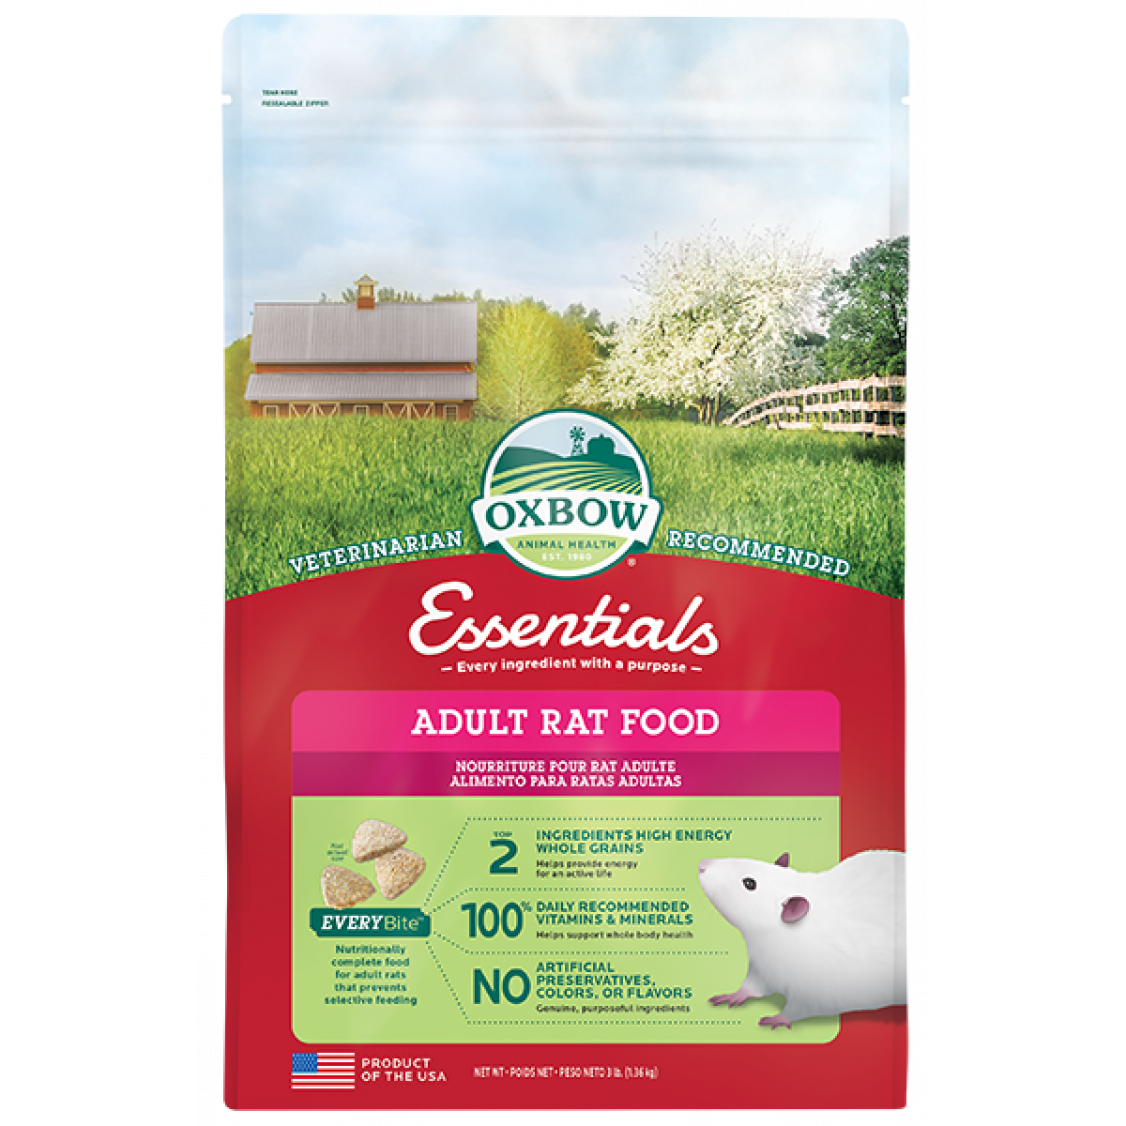 Oxbow Essentials - Adult Rat Food (3lb)